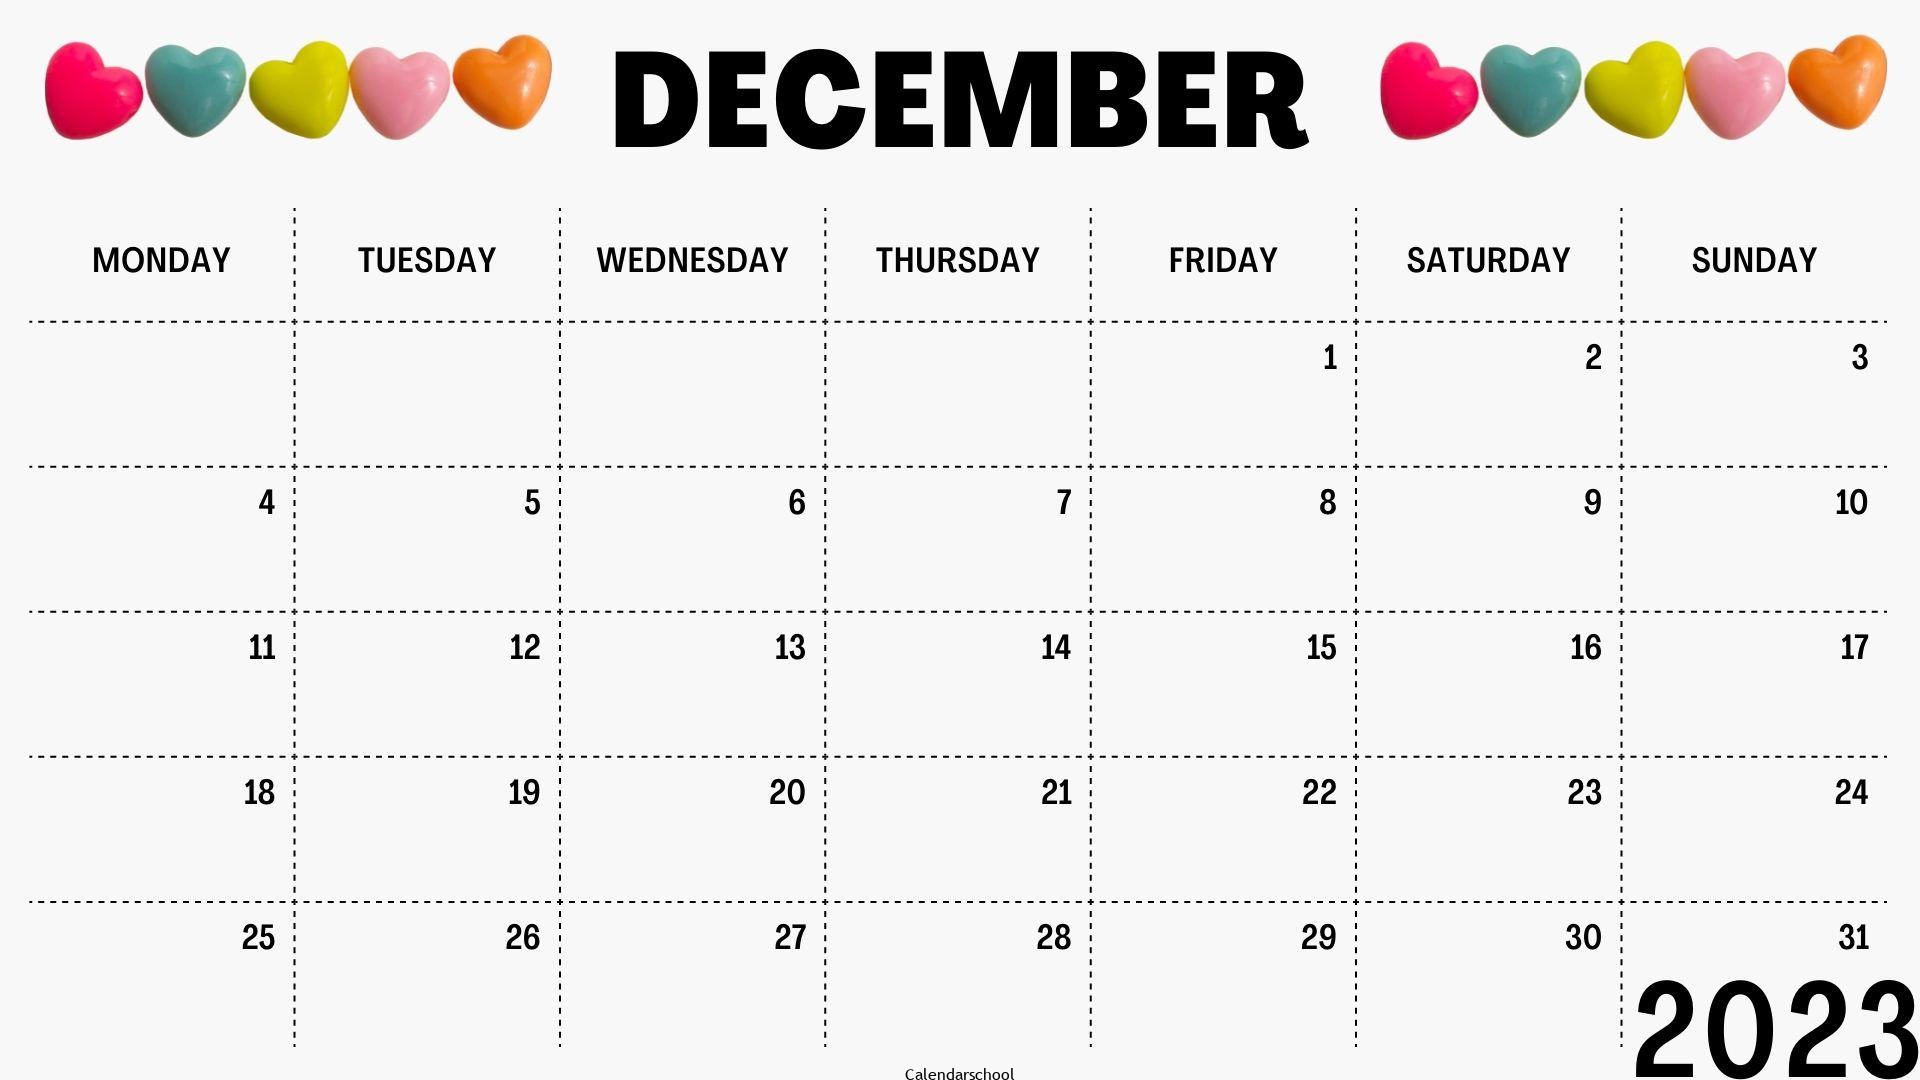 December 2023 Weekly Calendar Template